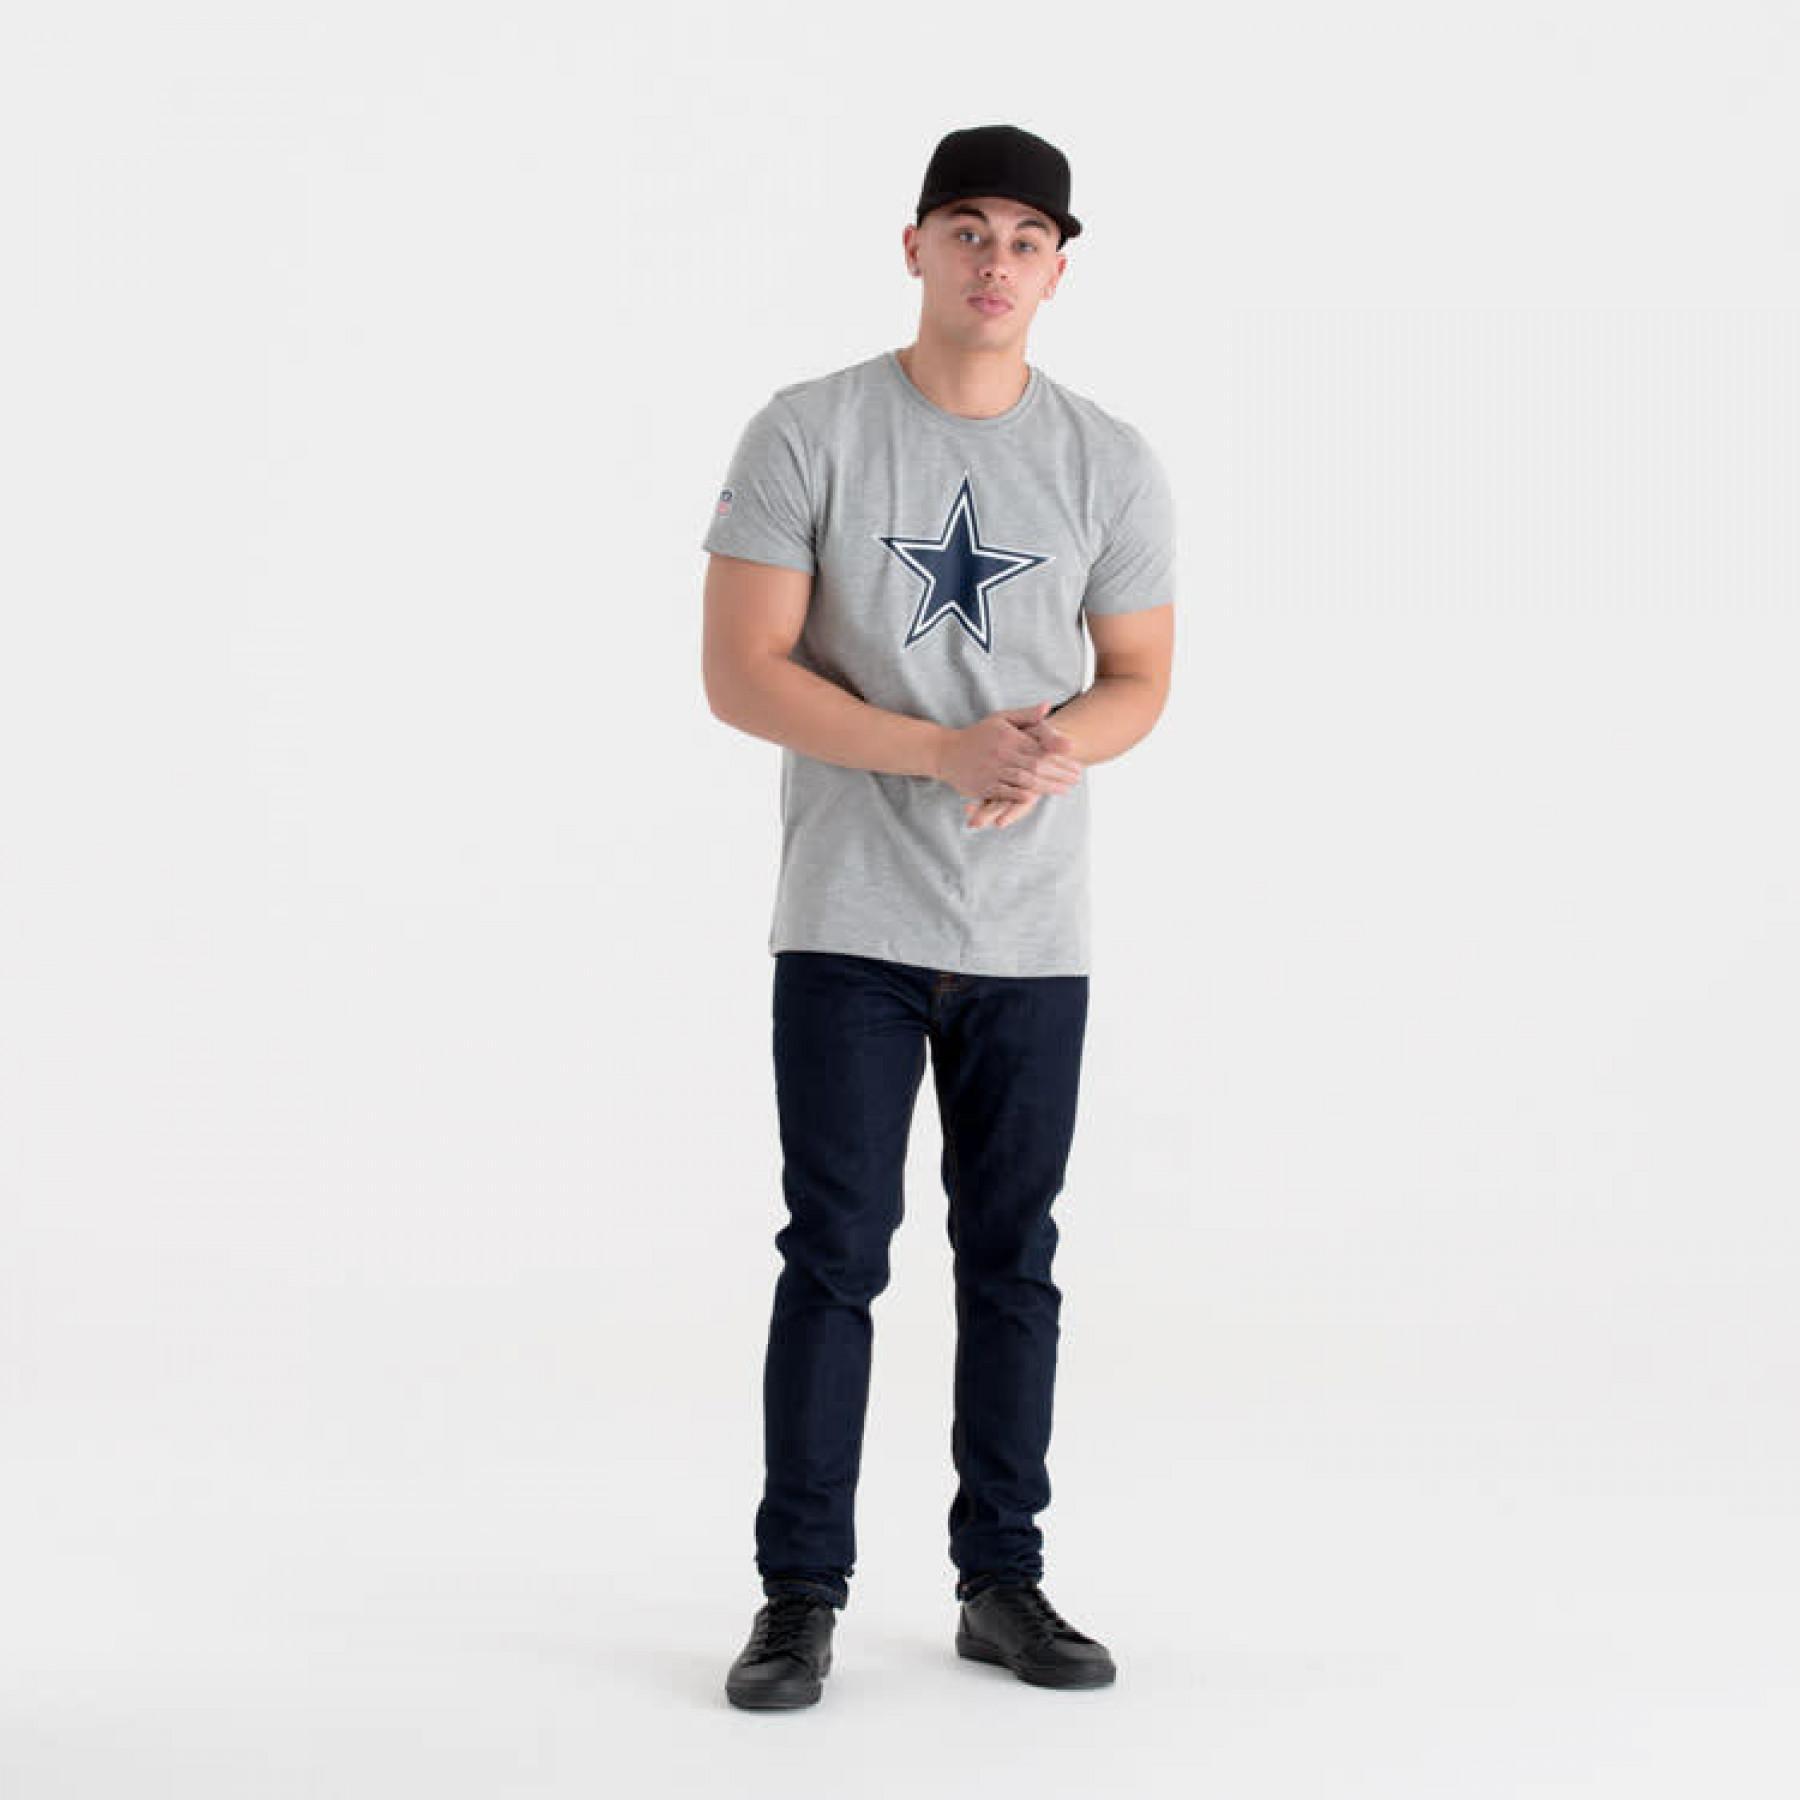 Camiseta logo Dallas Cowboys